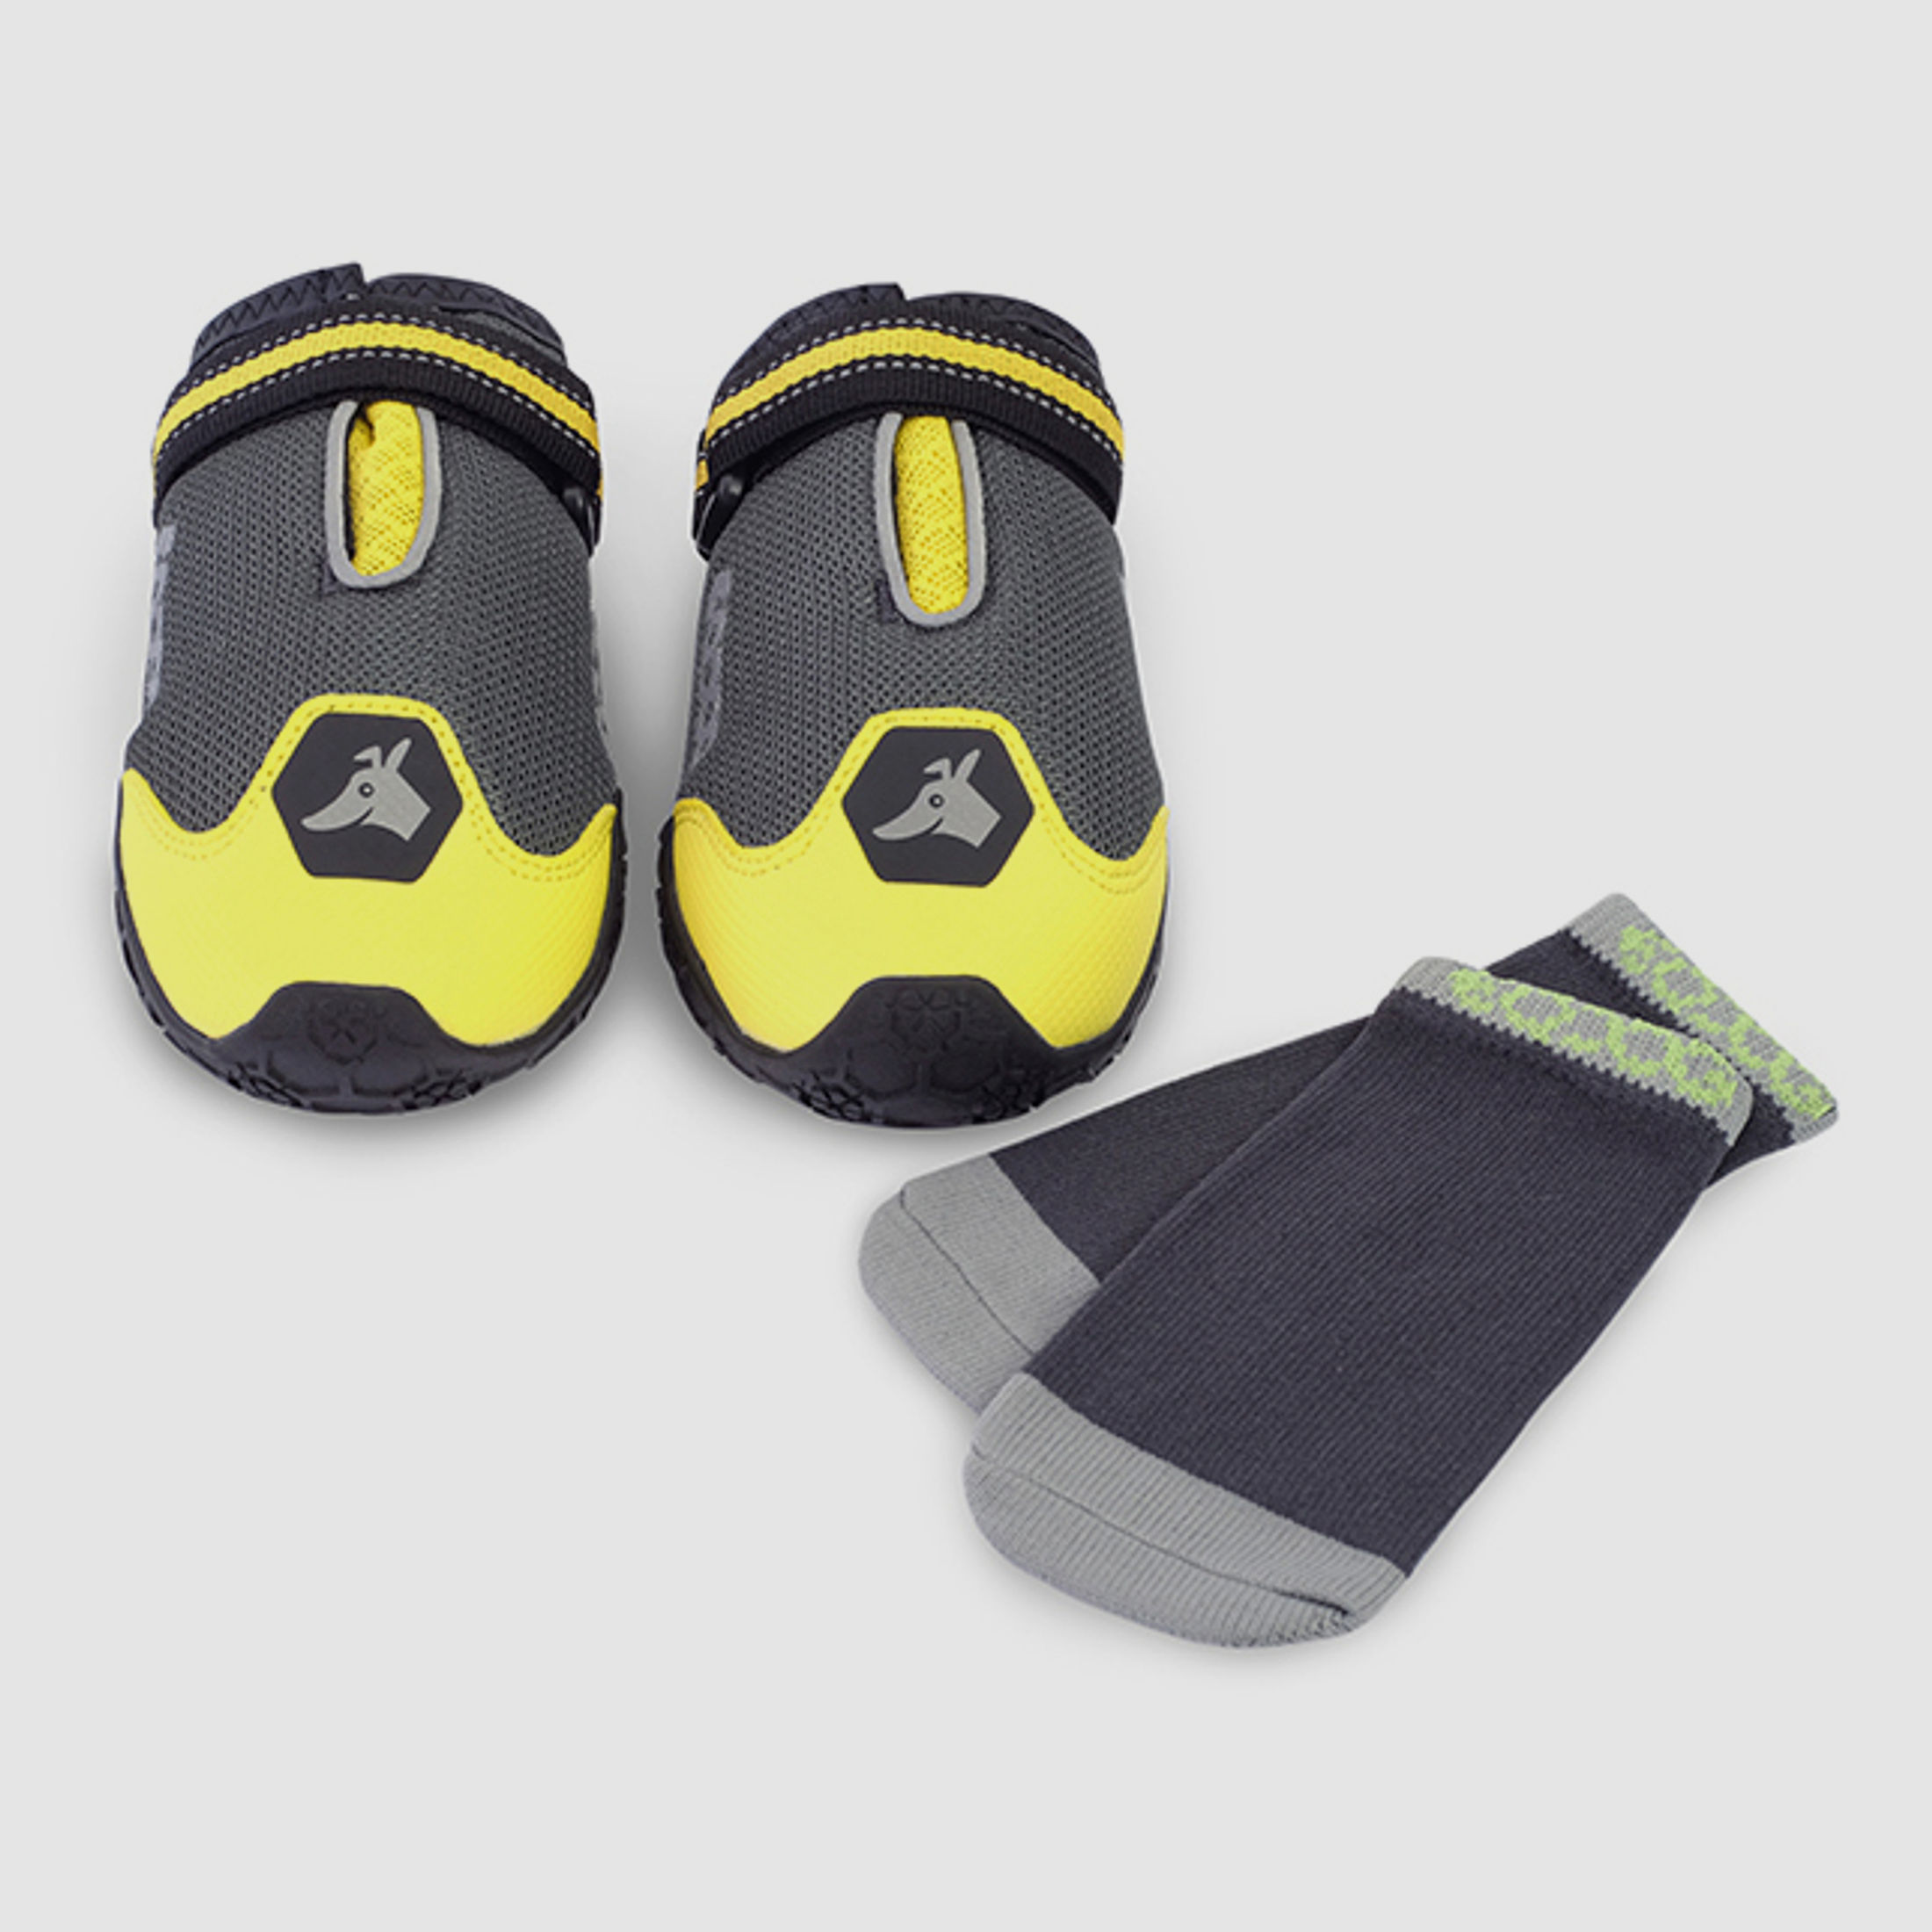 EQDOG - 1 Paar Hundeschuhe inkl. Socken | 4 Season Shoes yellow grey XXS bis max. 58mm Pfotenbreite